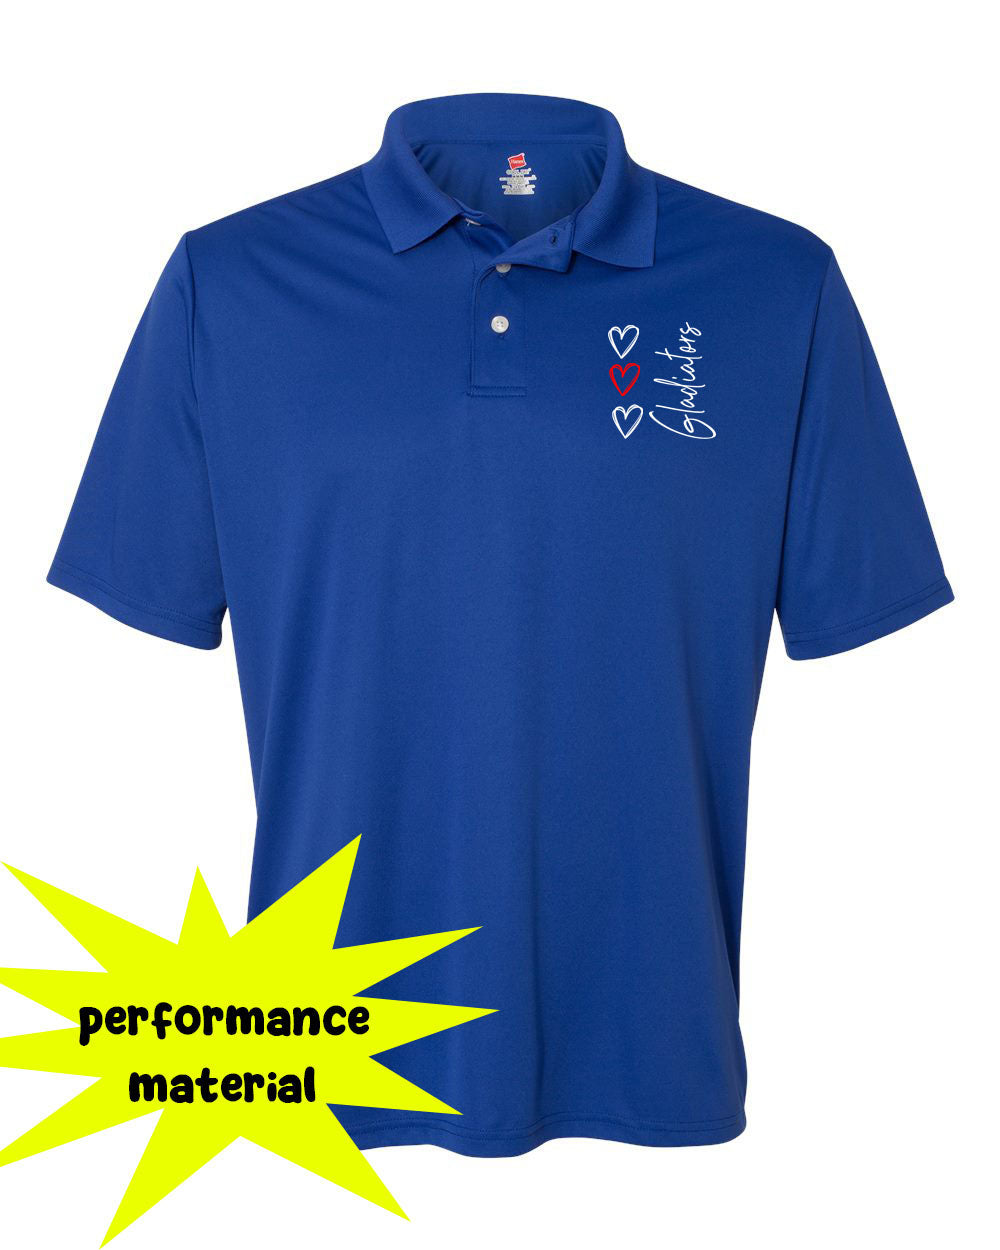 Goshen School Performance Material Polo T-Shirt Design 4